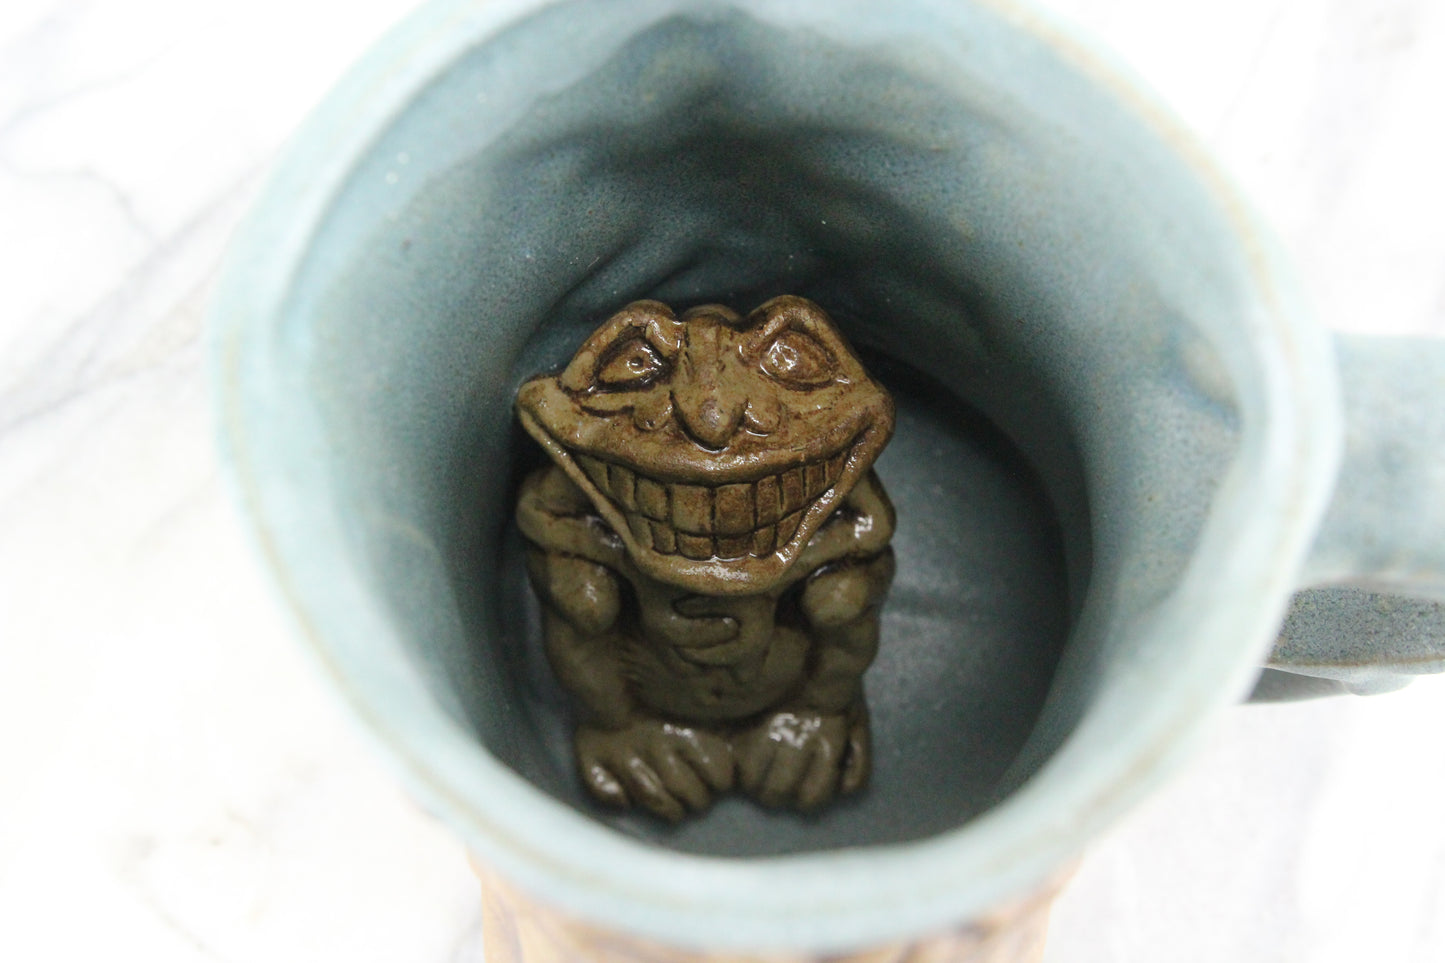 Jim Rumph Ceramic Troll Face Mug with Creepy Frog Inside